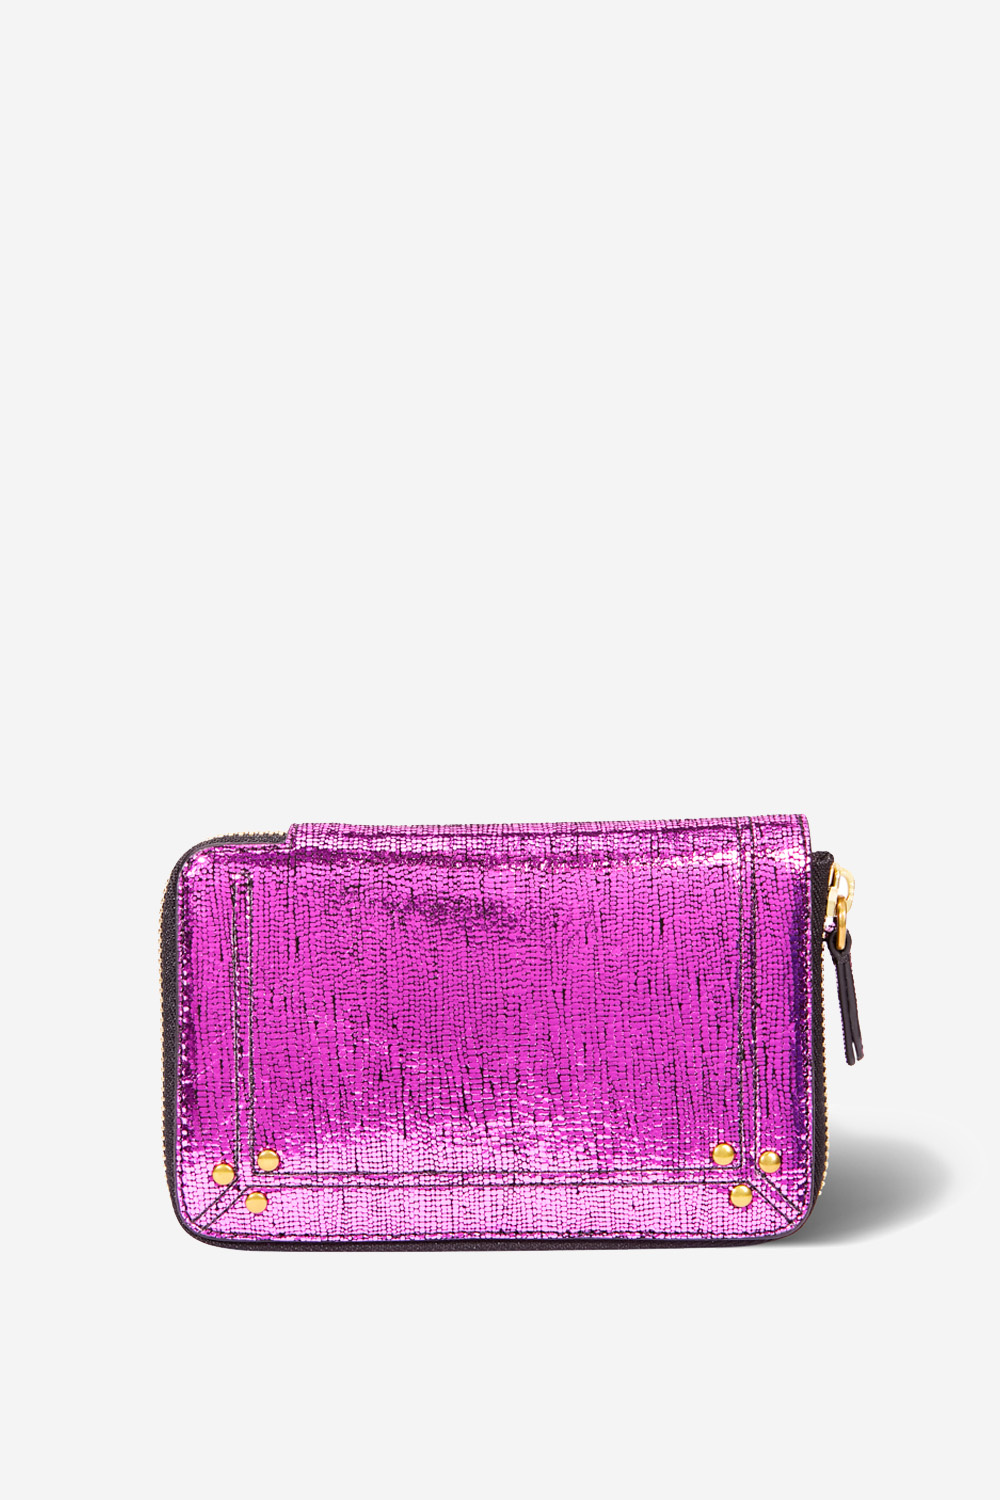 Jerome Dreyfuss Wallet Pink